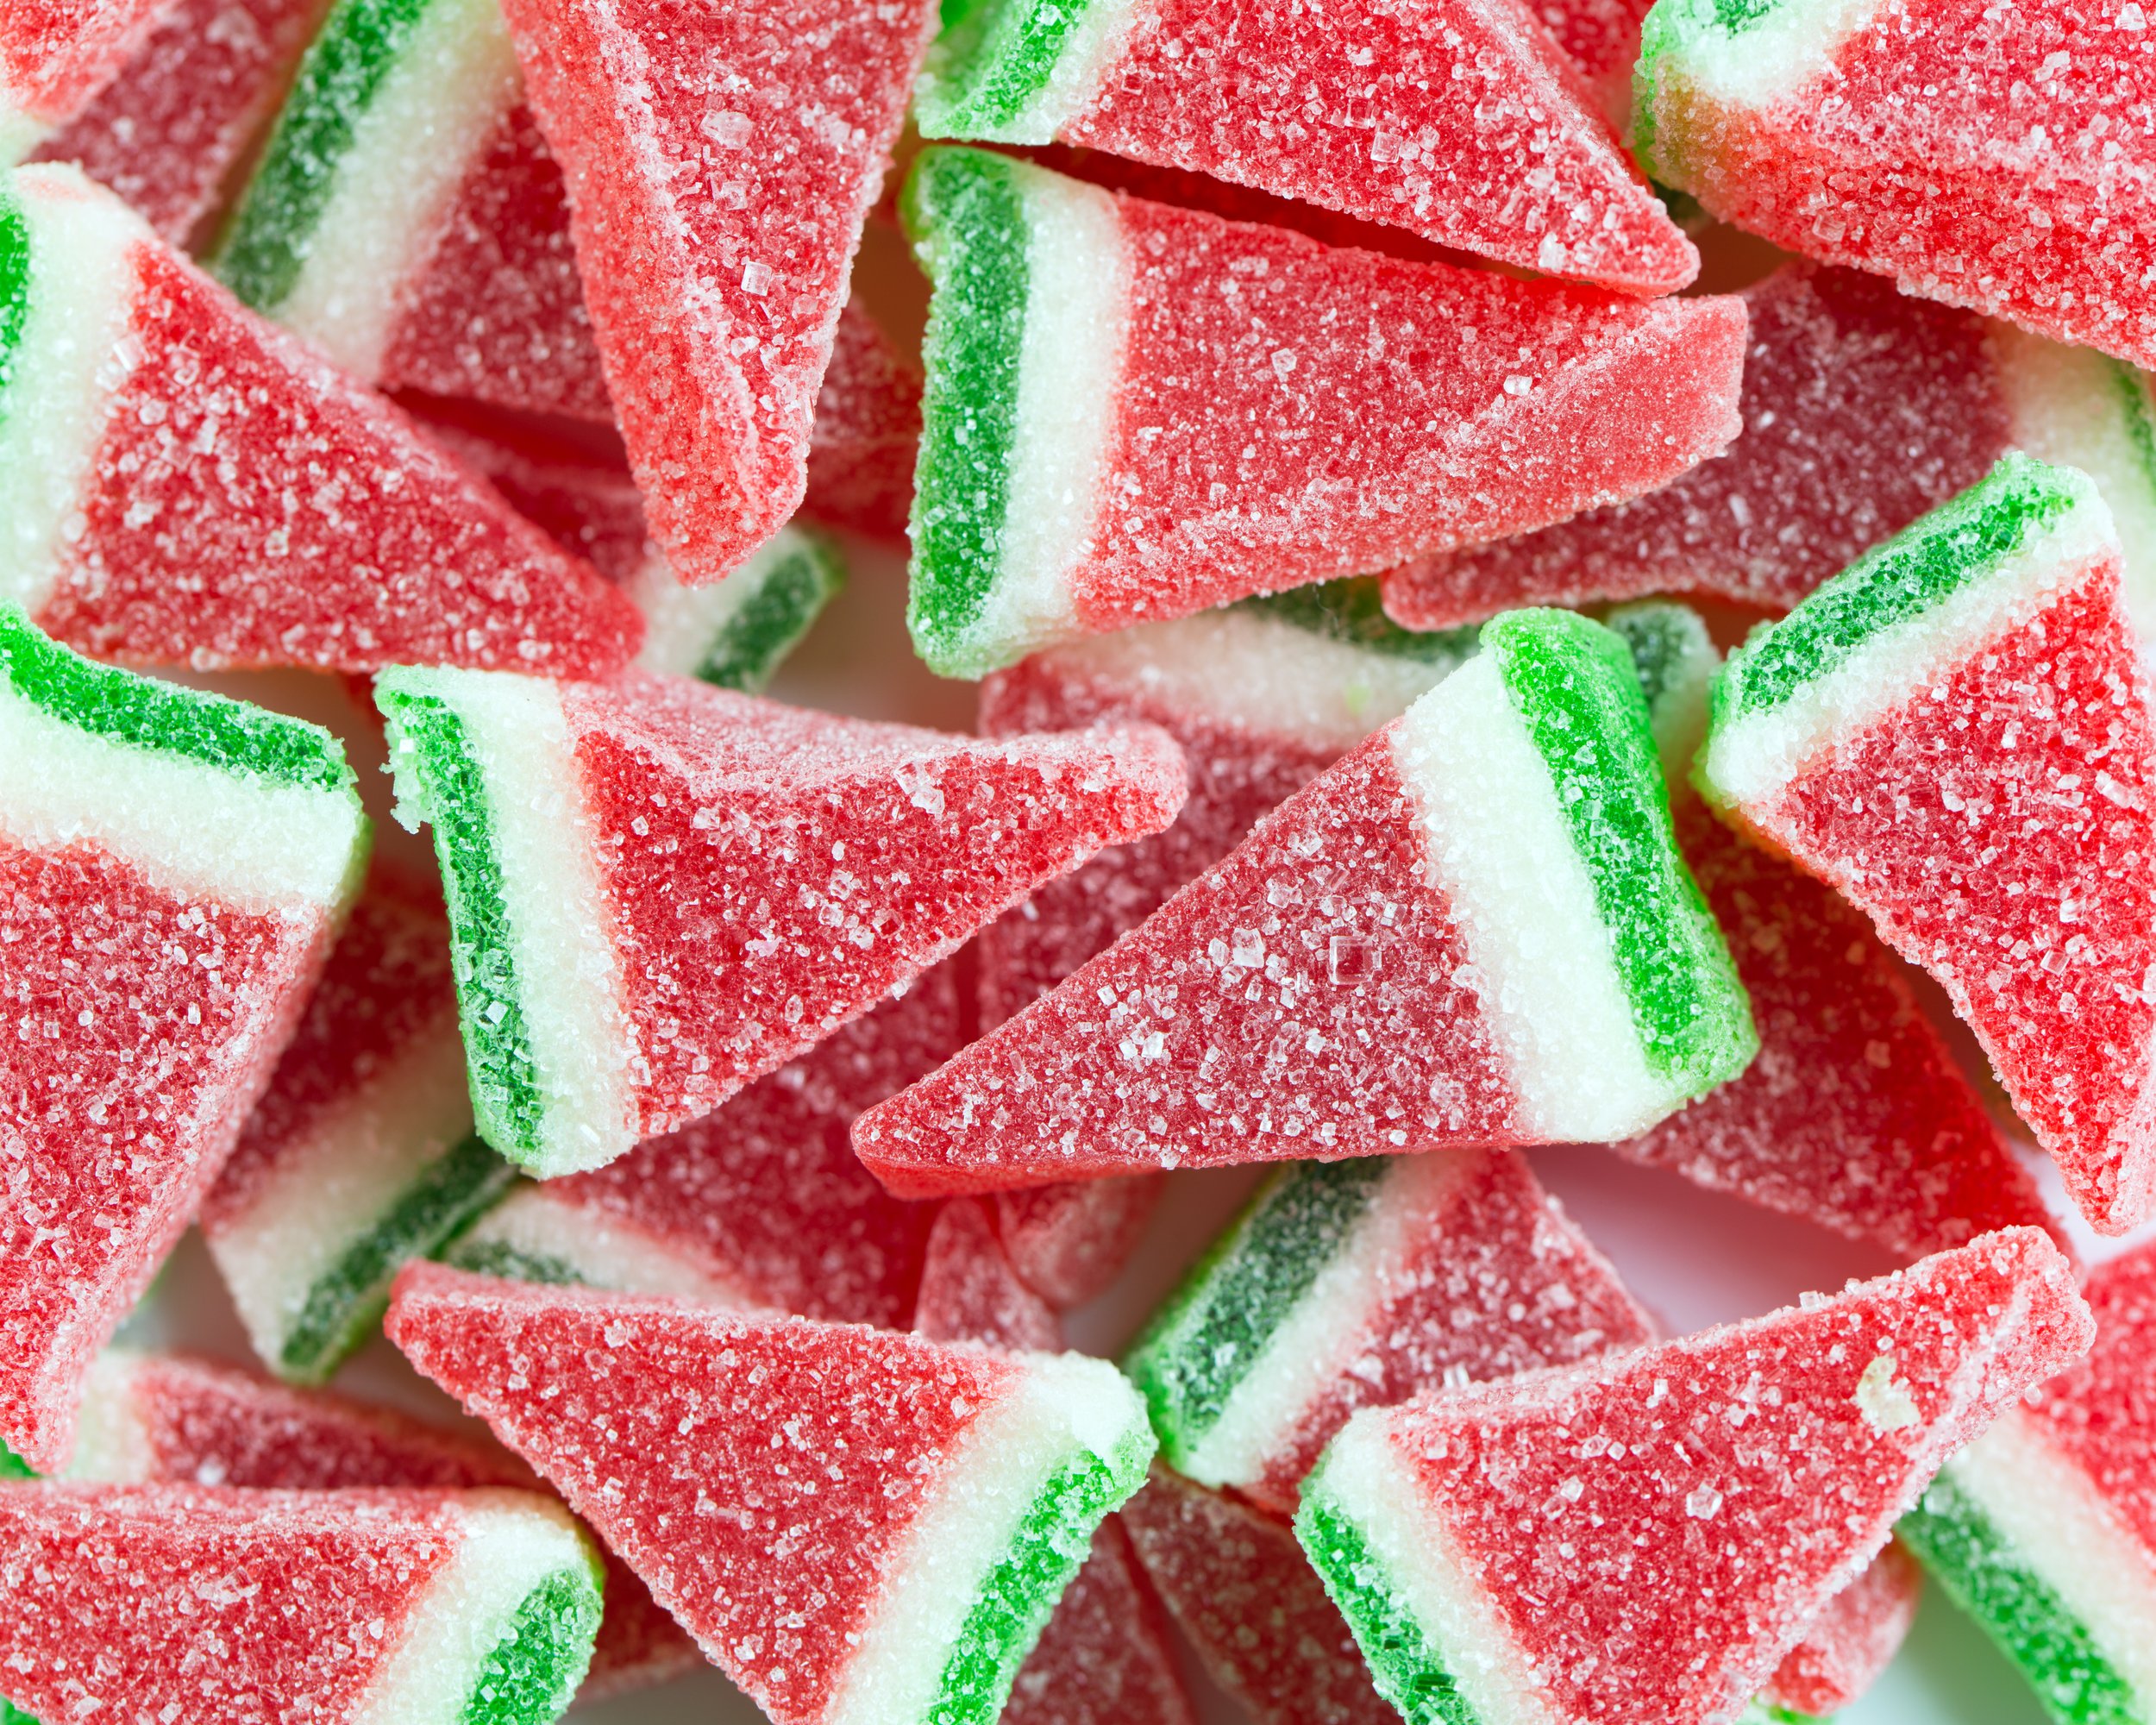 watermelon-gummy-candy-2021-08-26-22-35-26-utc.jpg